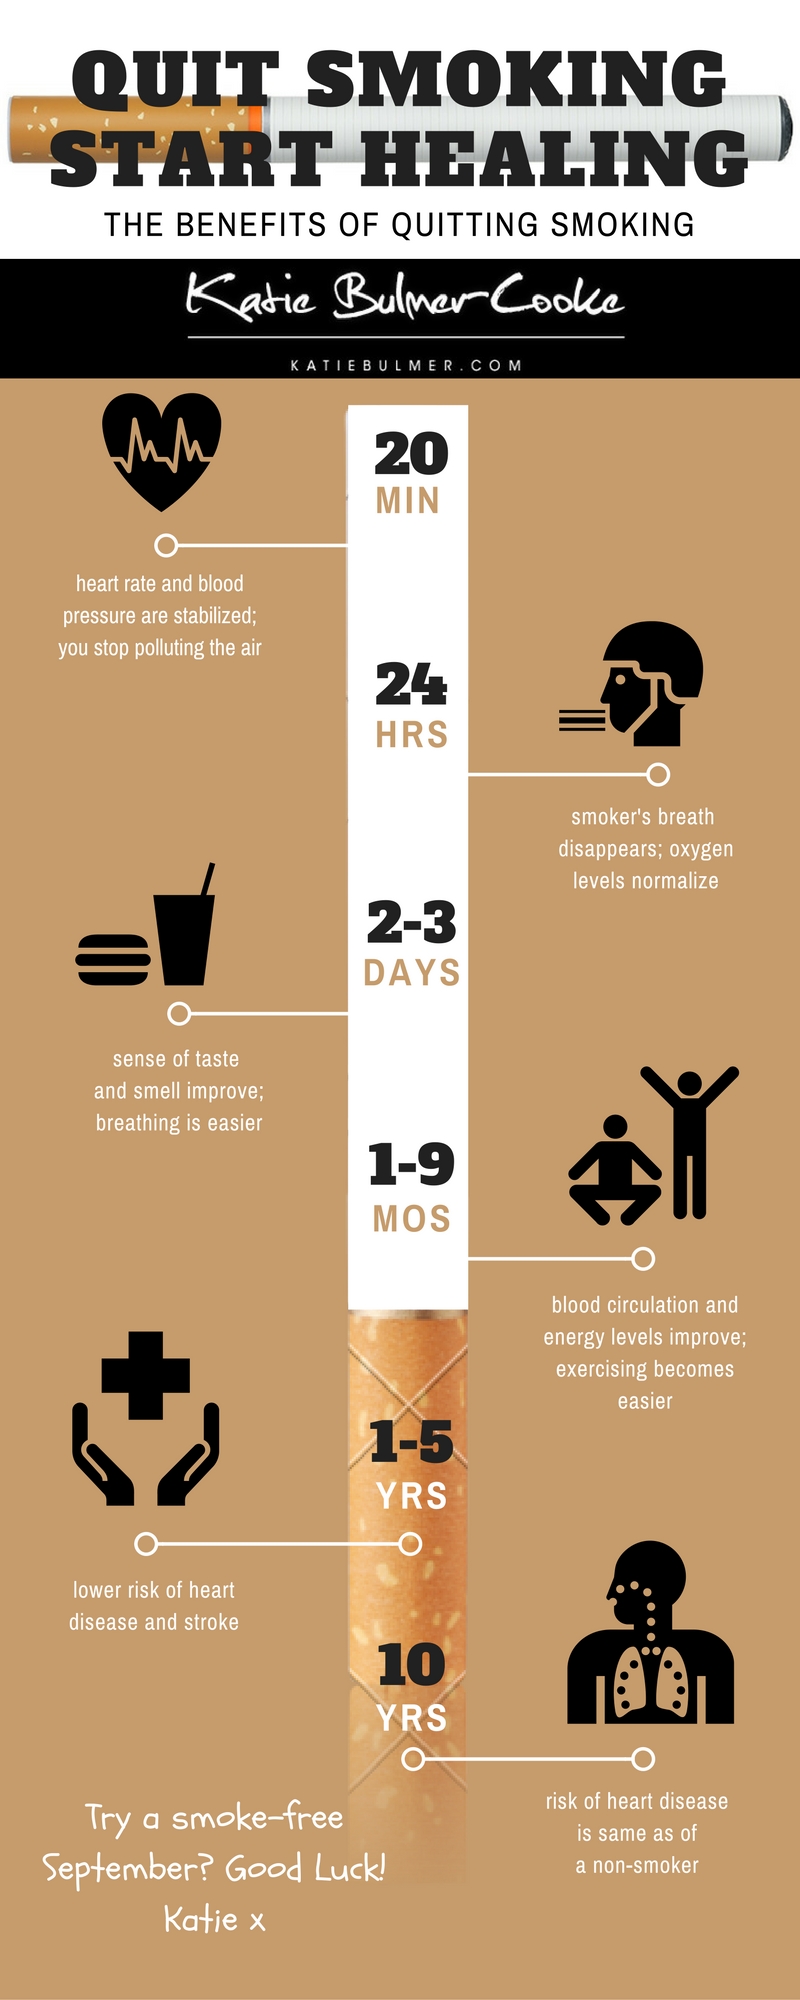 Don't Smoke - The Wellness Institute